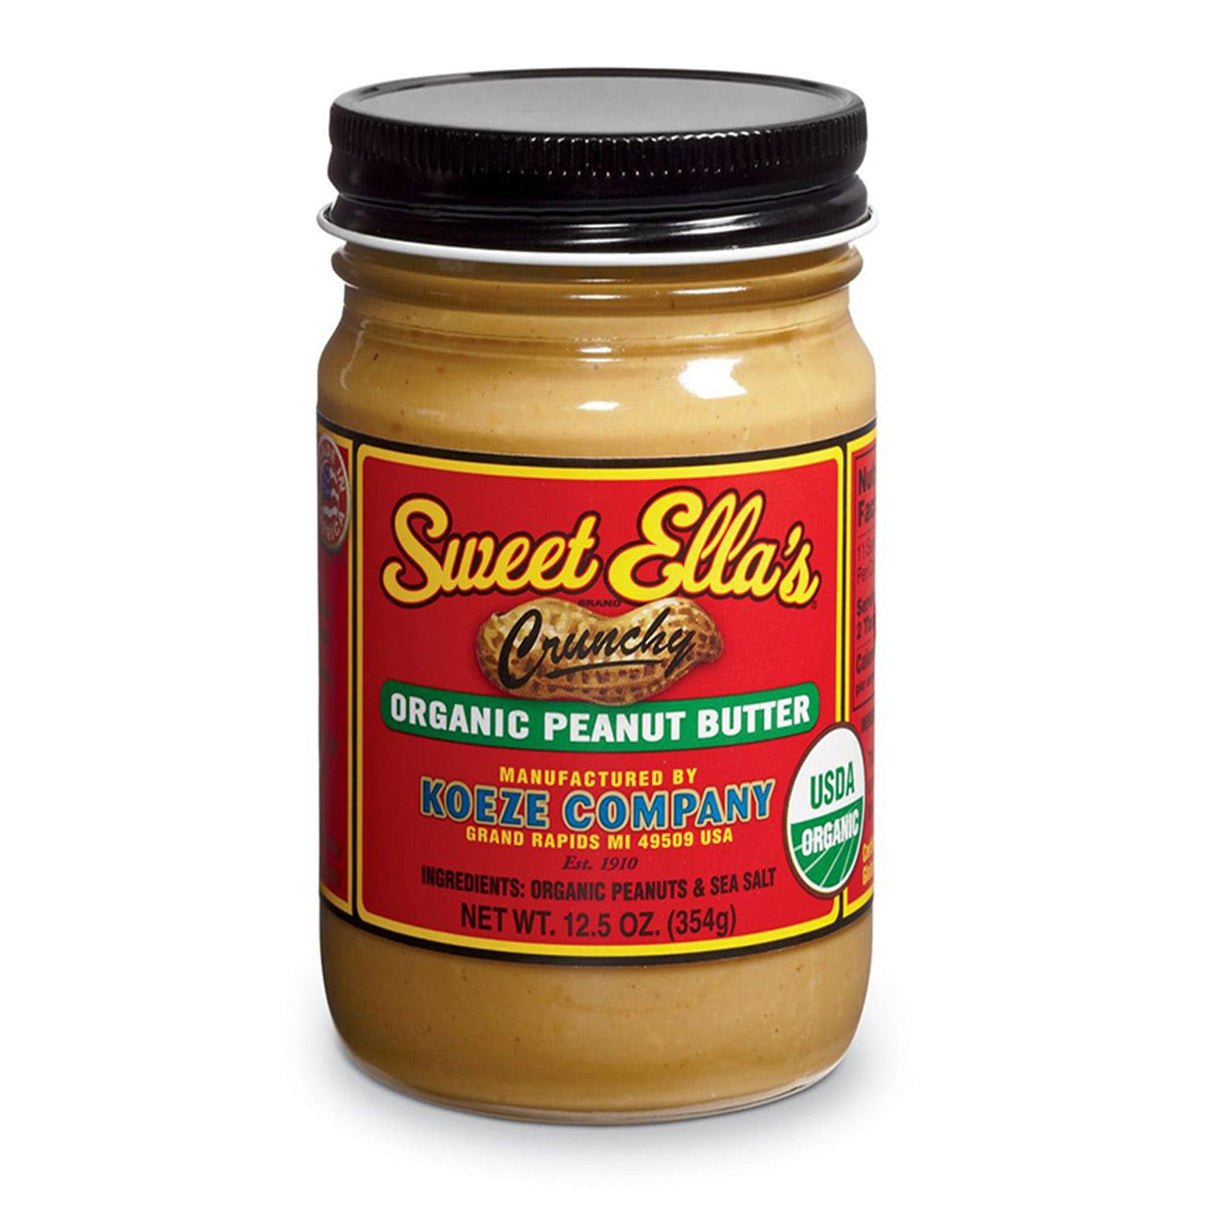 Sweet Ella's Crunchy Organic Peanut Butter